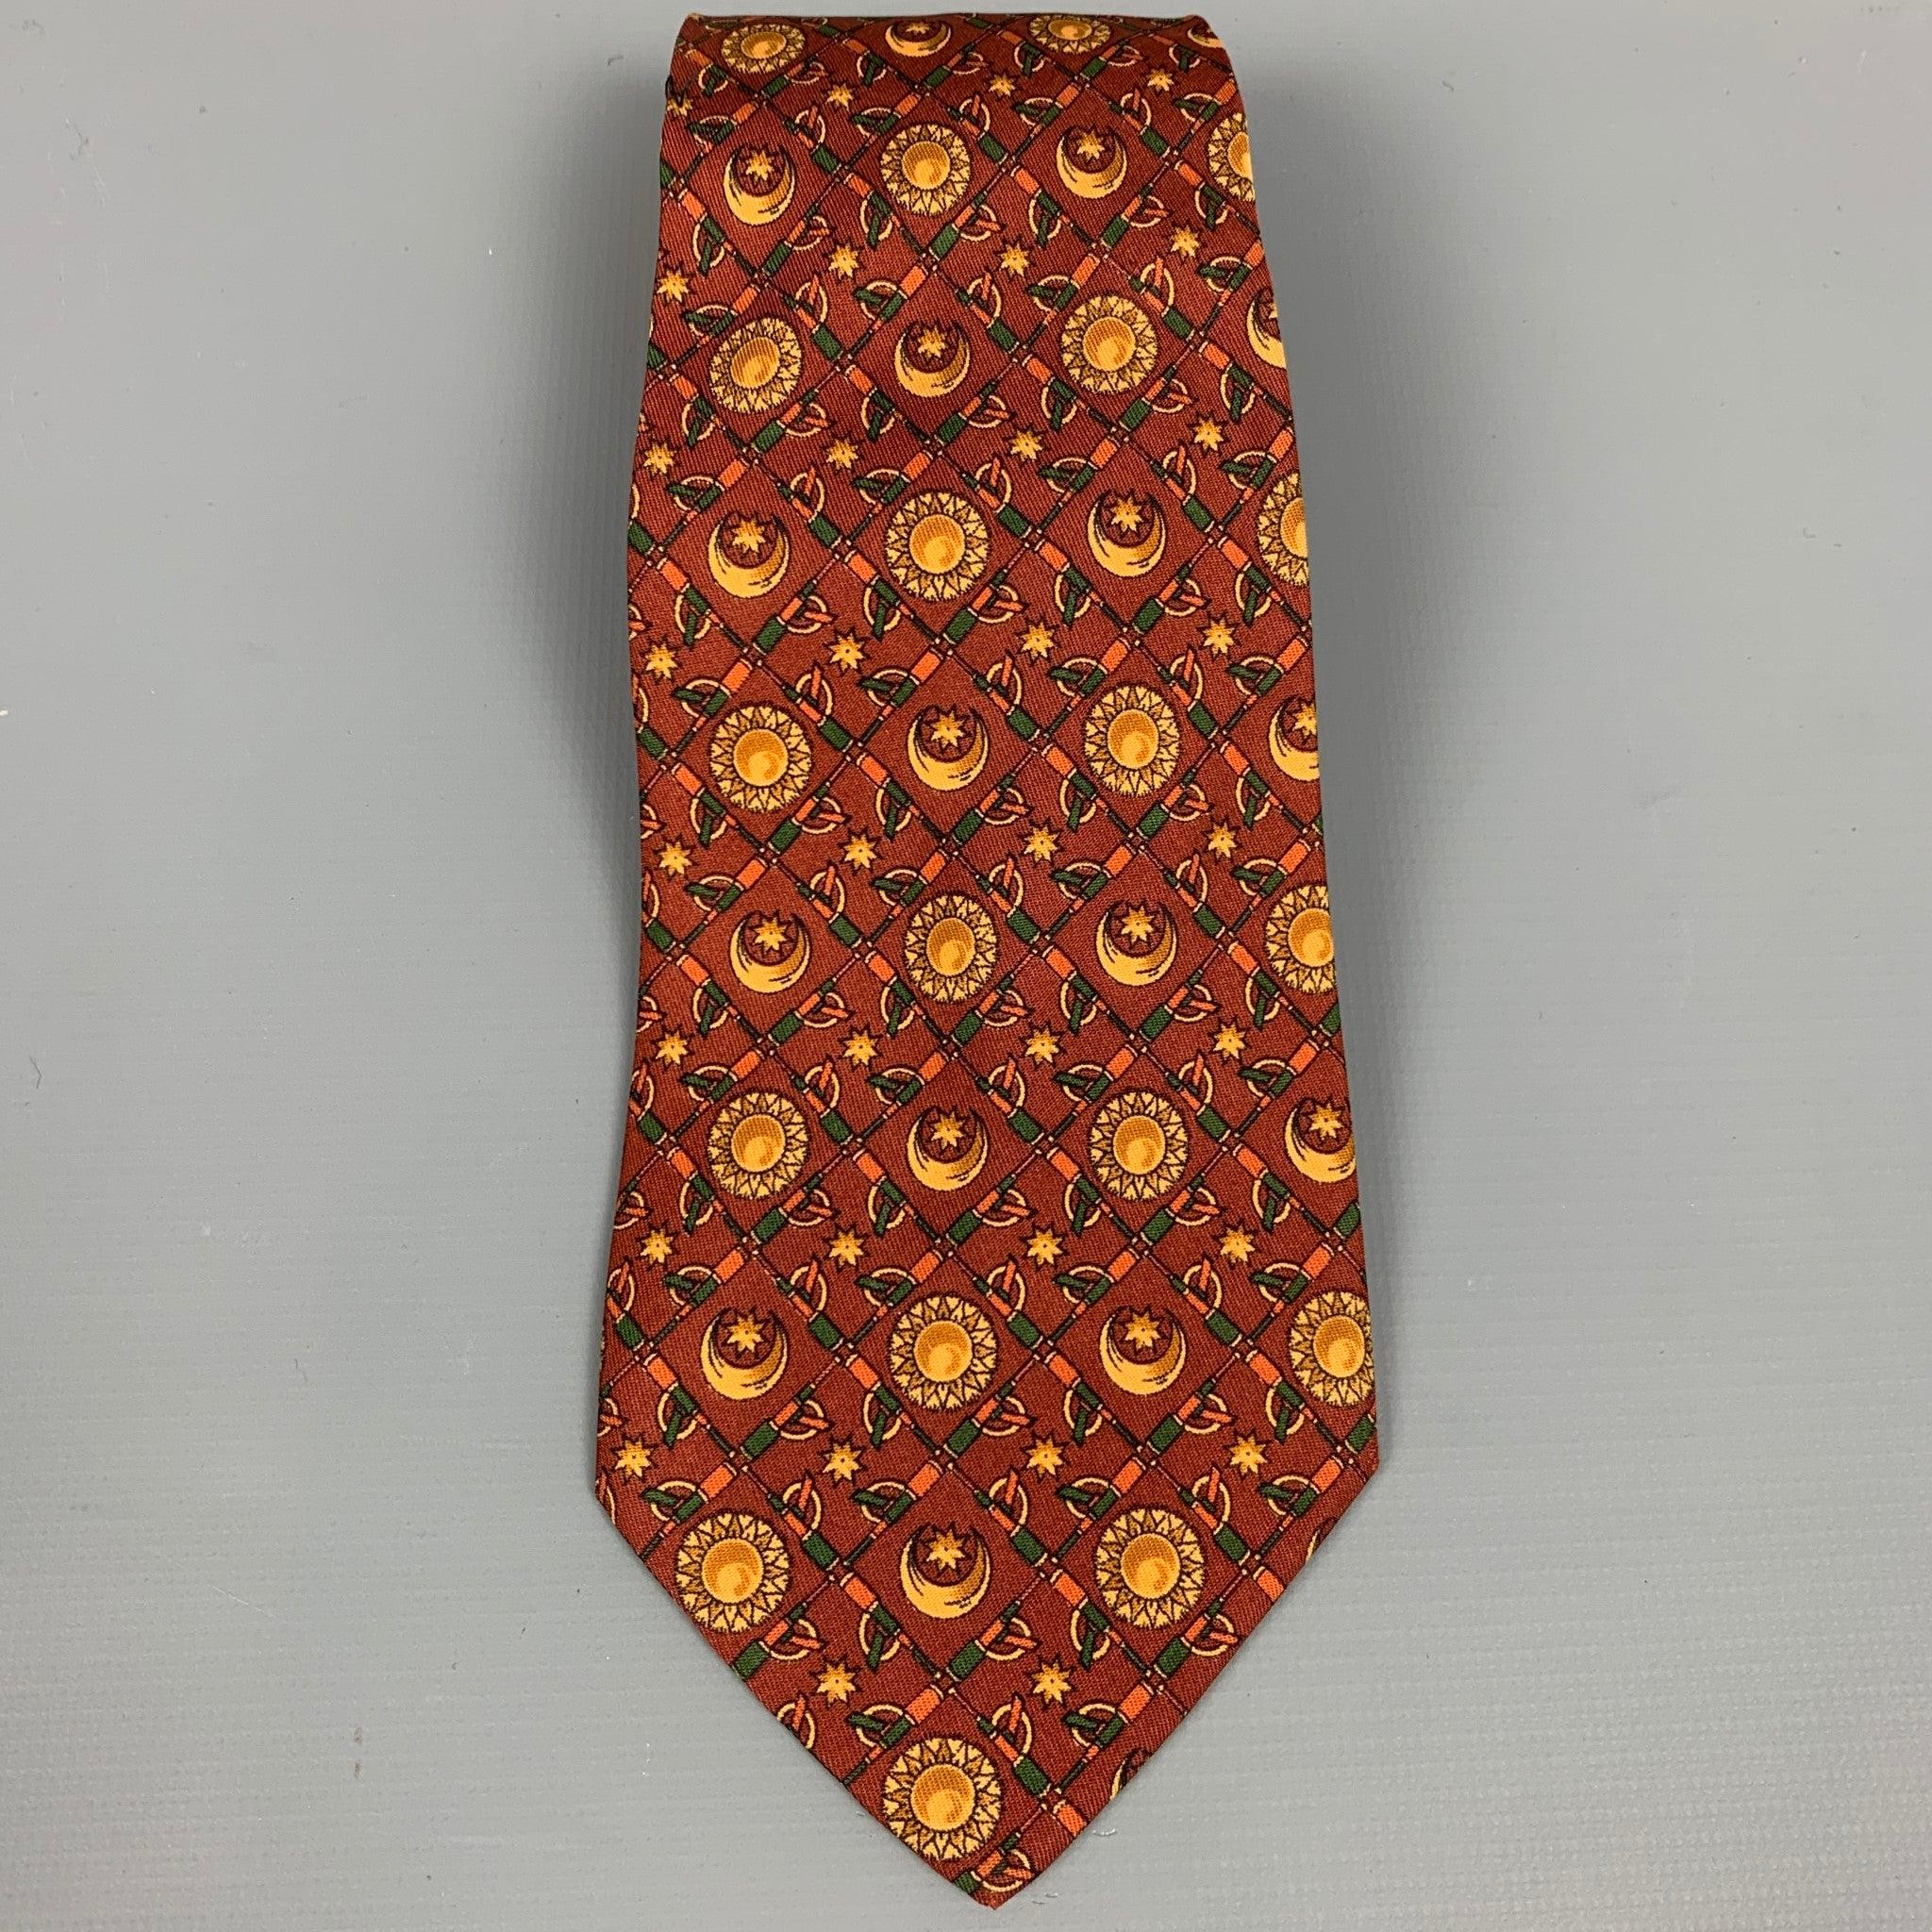 SALVATORE FERRAGAMO neck tie comes in a copper sun & moon print silk. Made in ItalyVery Good Pre-Owned Condition. 

Measurements: 
  Width: 3.5 inches  
  
  
 
Reference: 51293
Category: Tie
More Details
    
Brand:  SALVATORE FERRAGAMO
Color: 